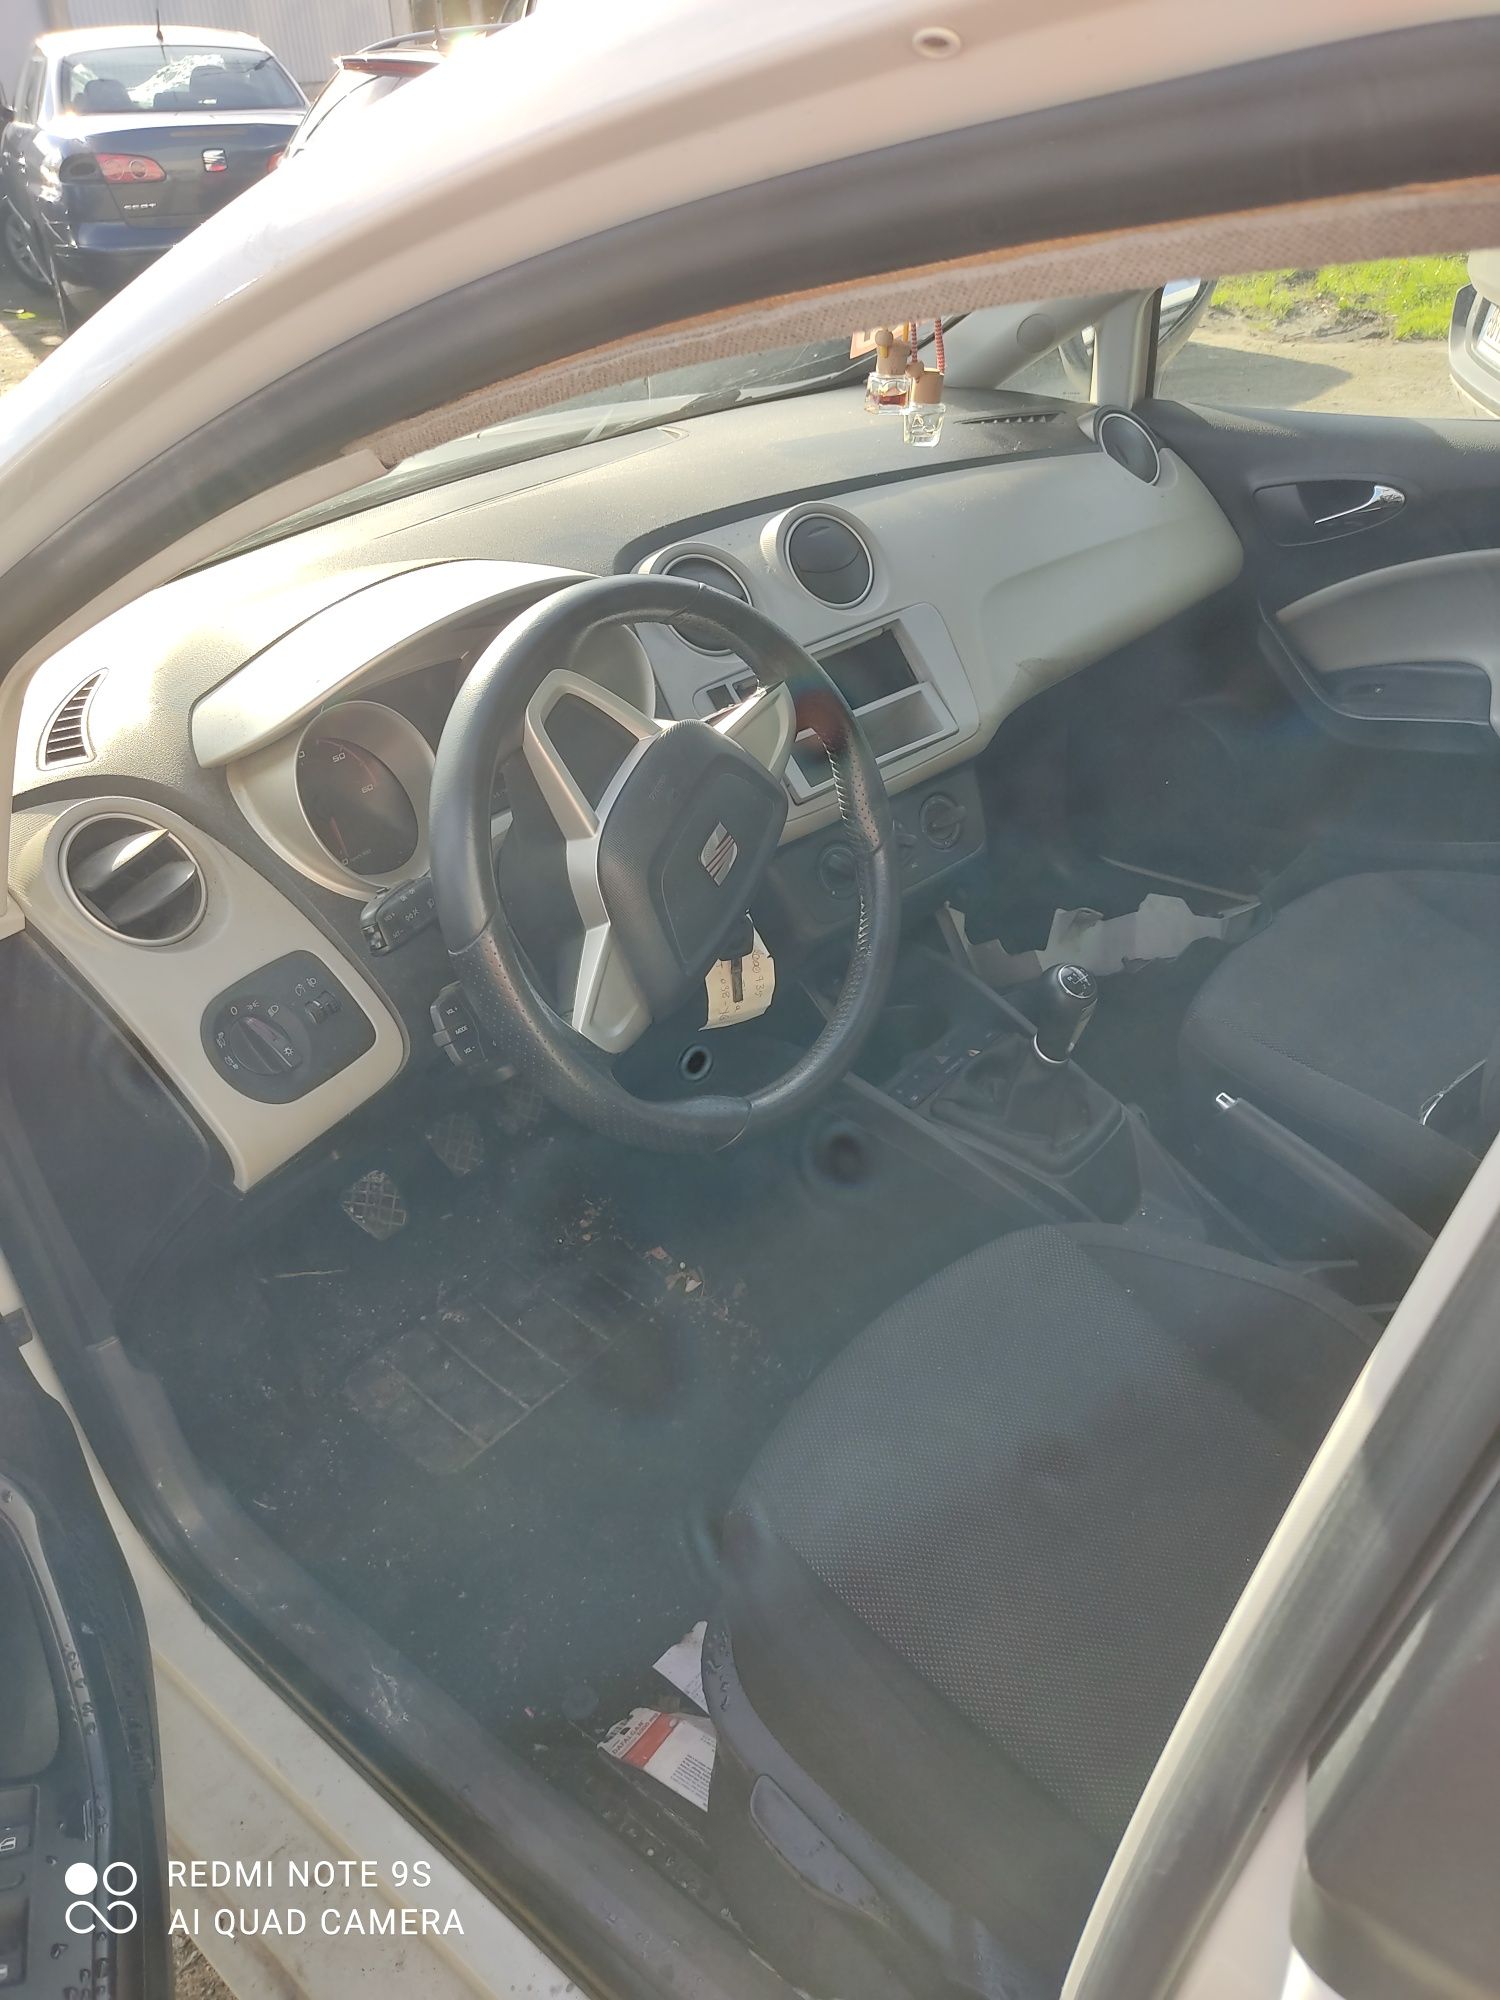 Peças Seat Ibiza 6j, motor bls, frente completa, airbags, traseira